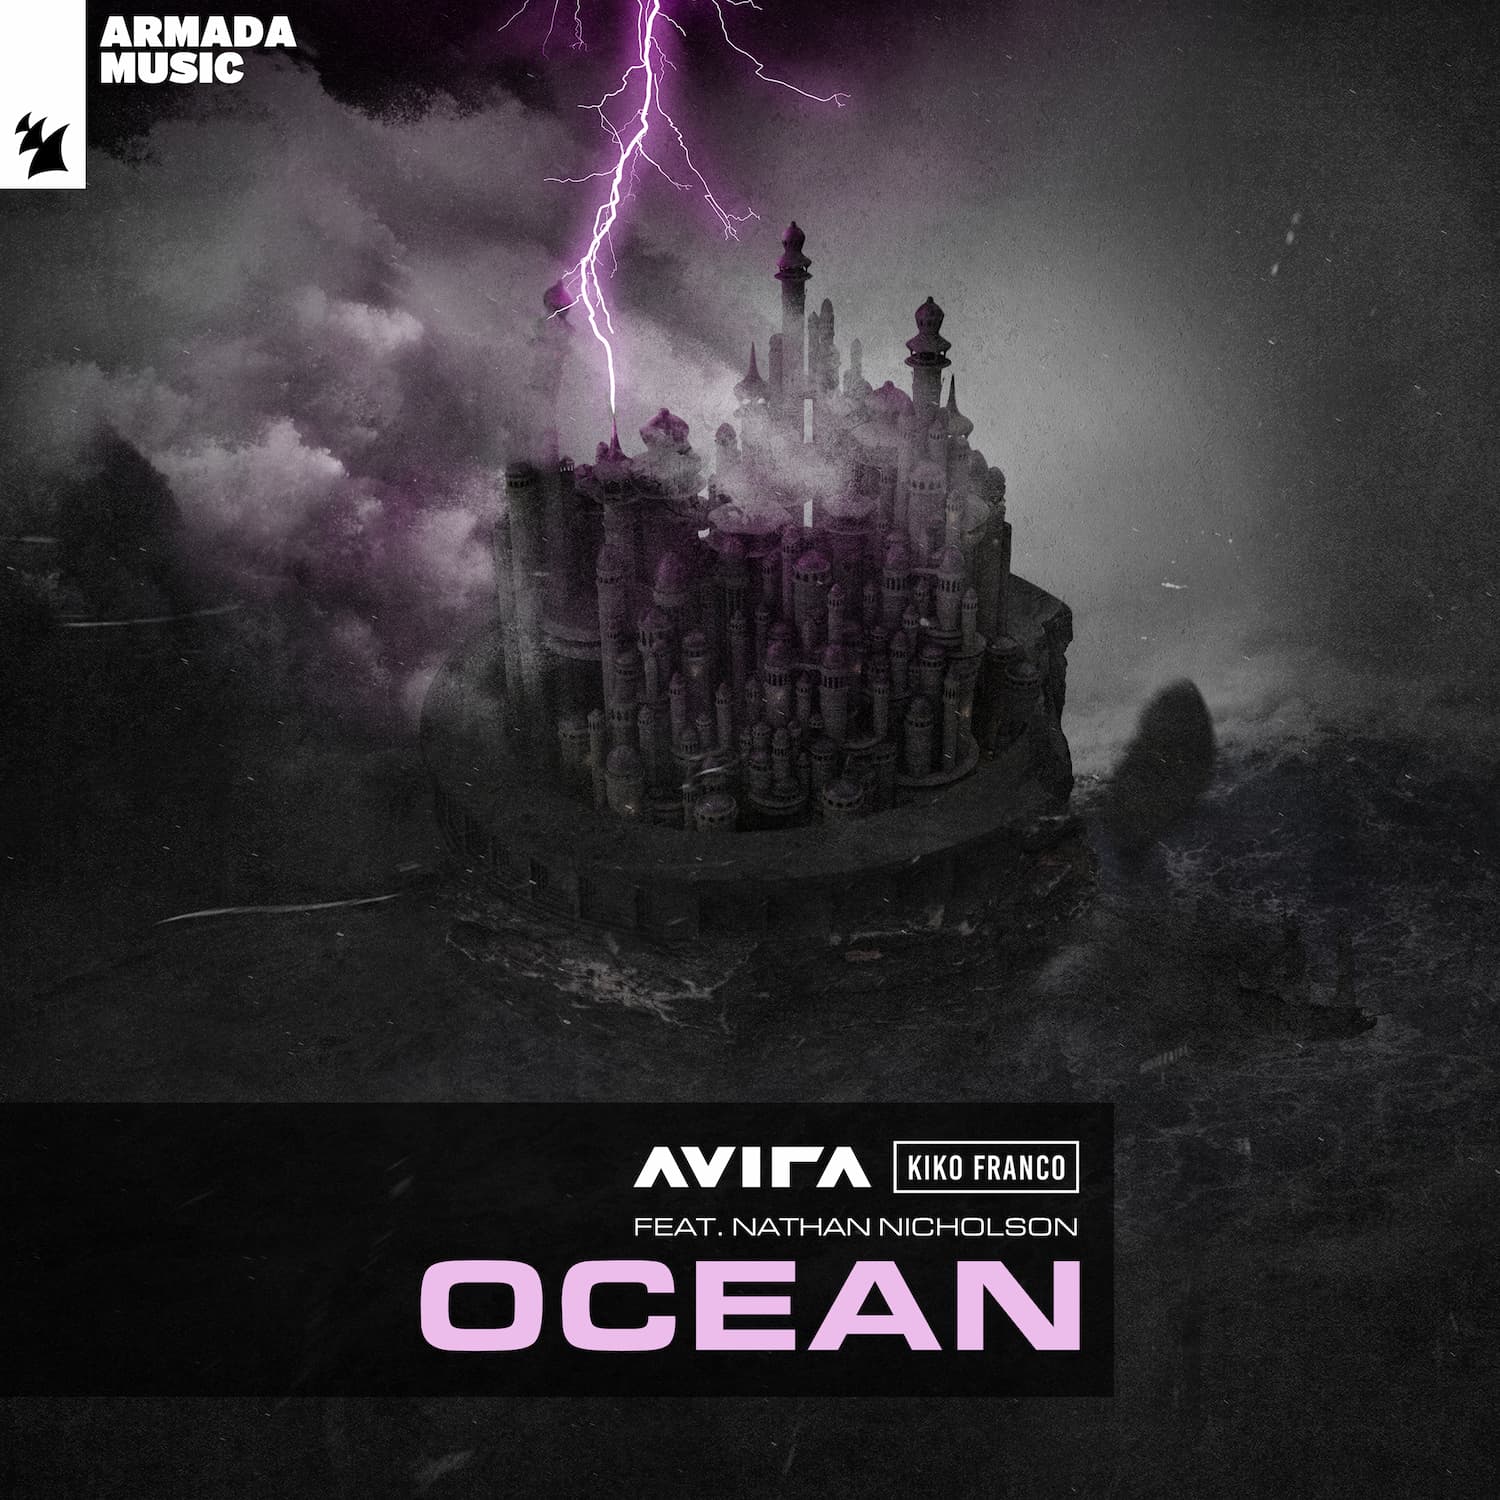 Kiko Franco, AVIRA e Nathan Nicholson lançam "Ocean" pela Armada